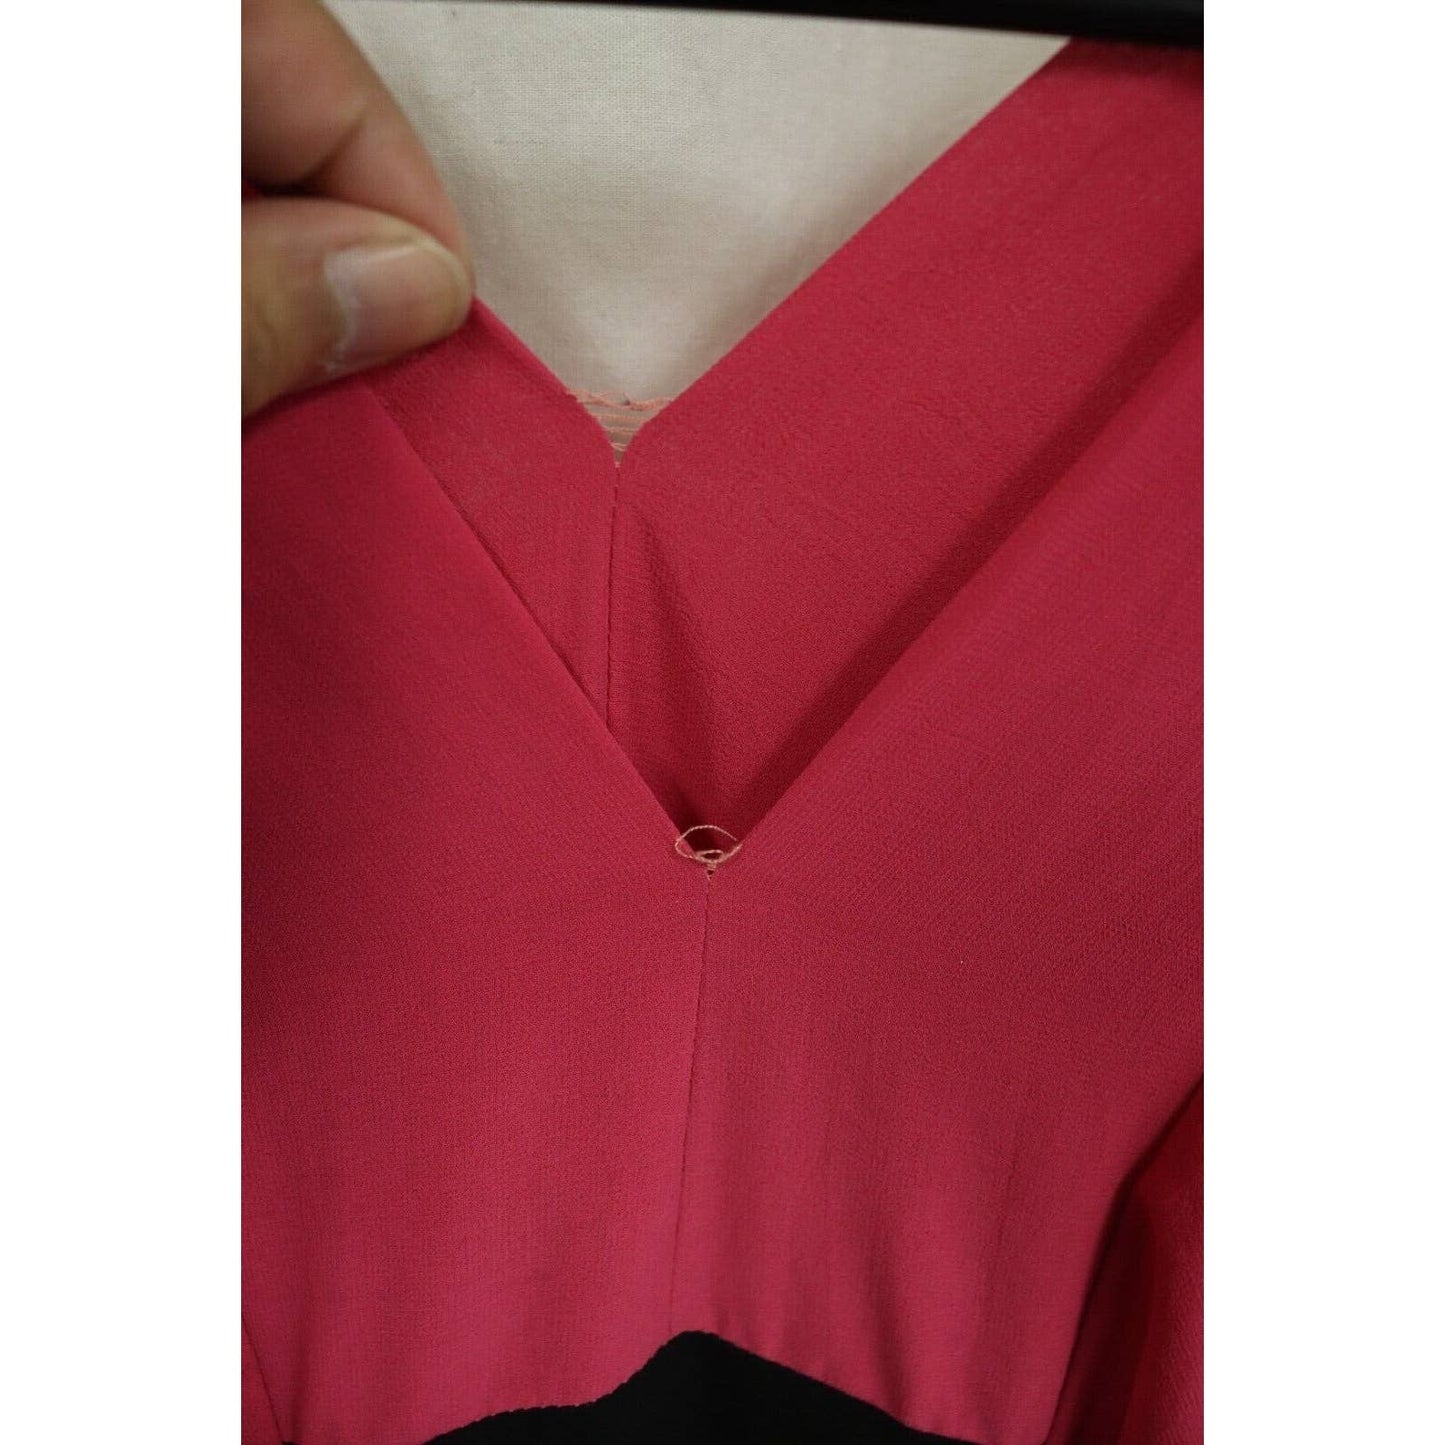 Black and Pink Abaya Batwing Maxi Sheer Light Weight Long Dress (H)